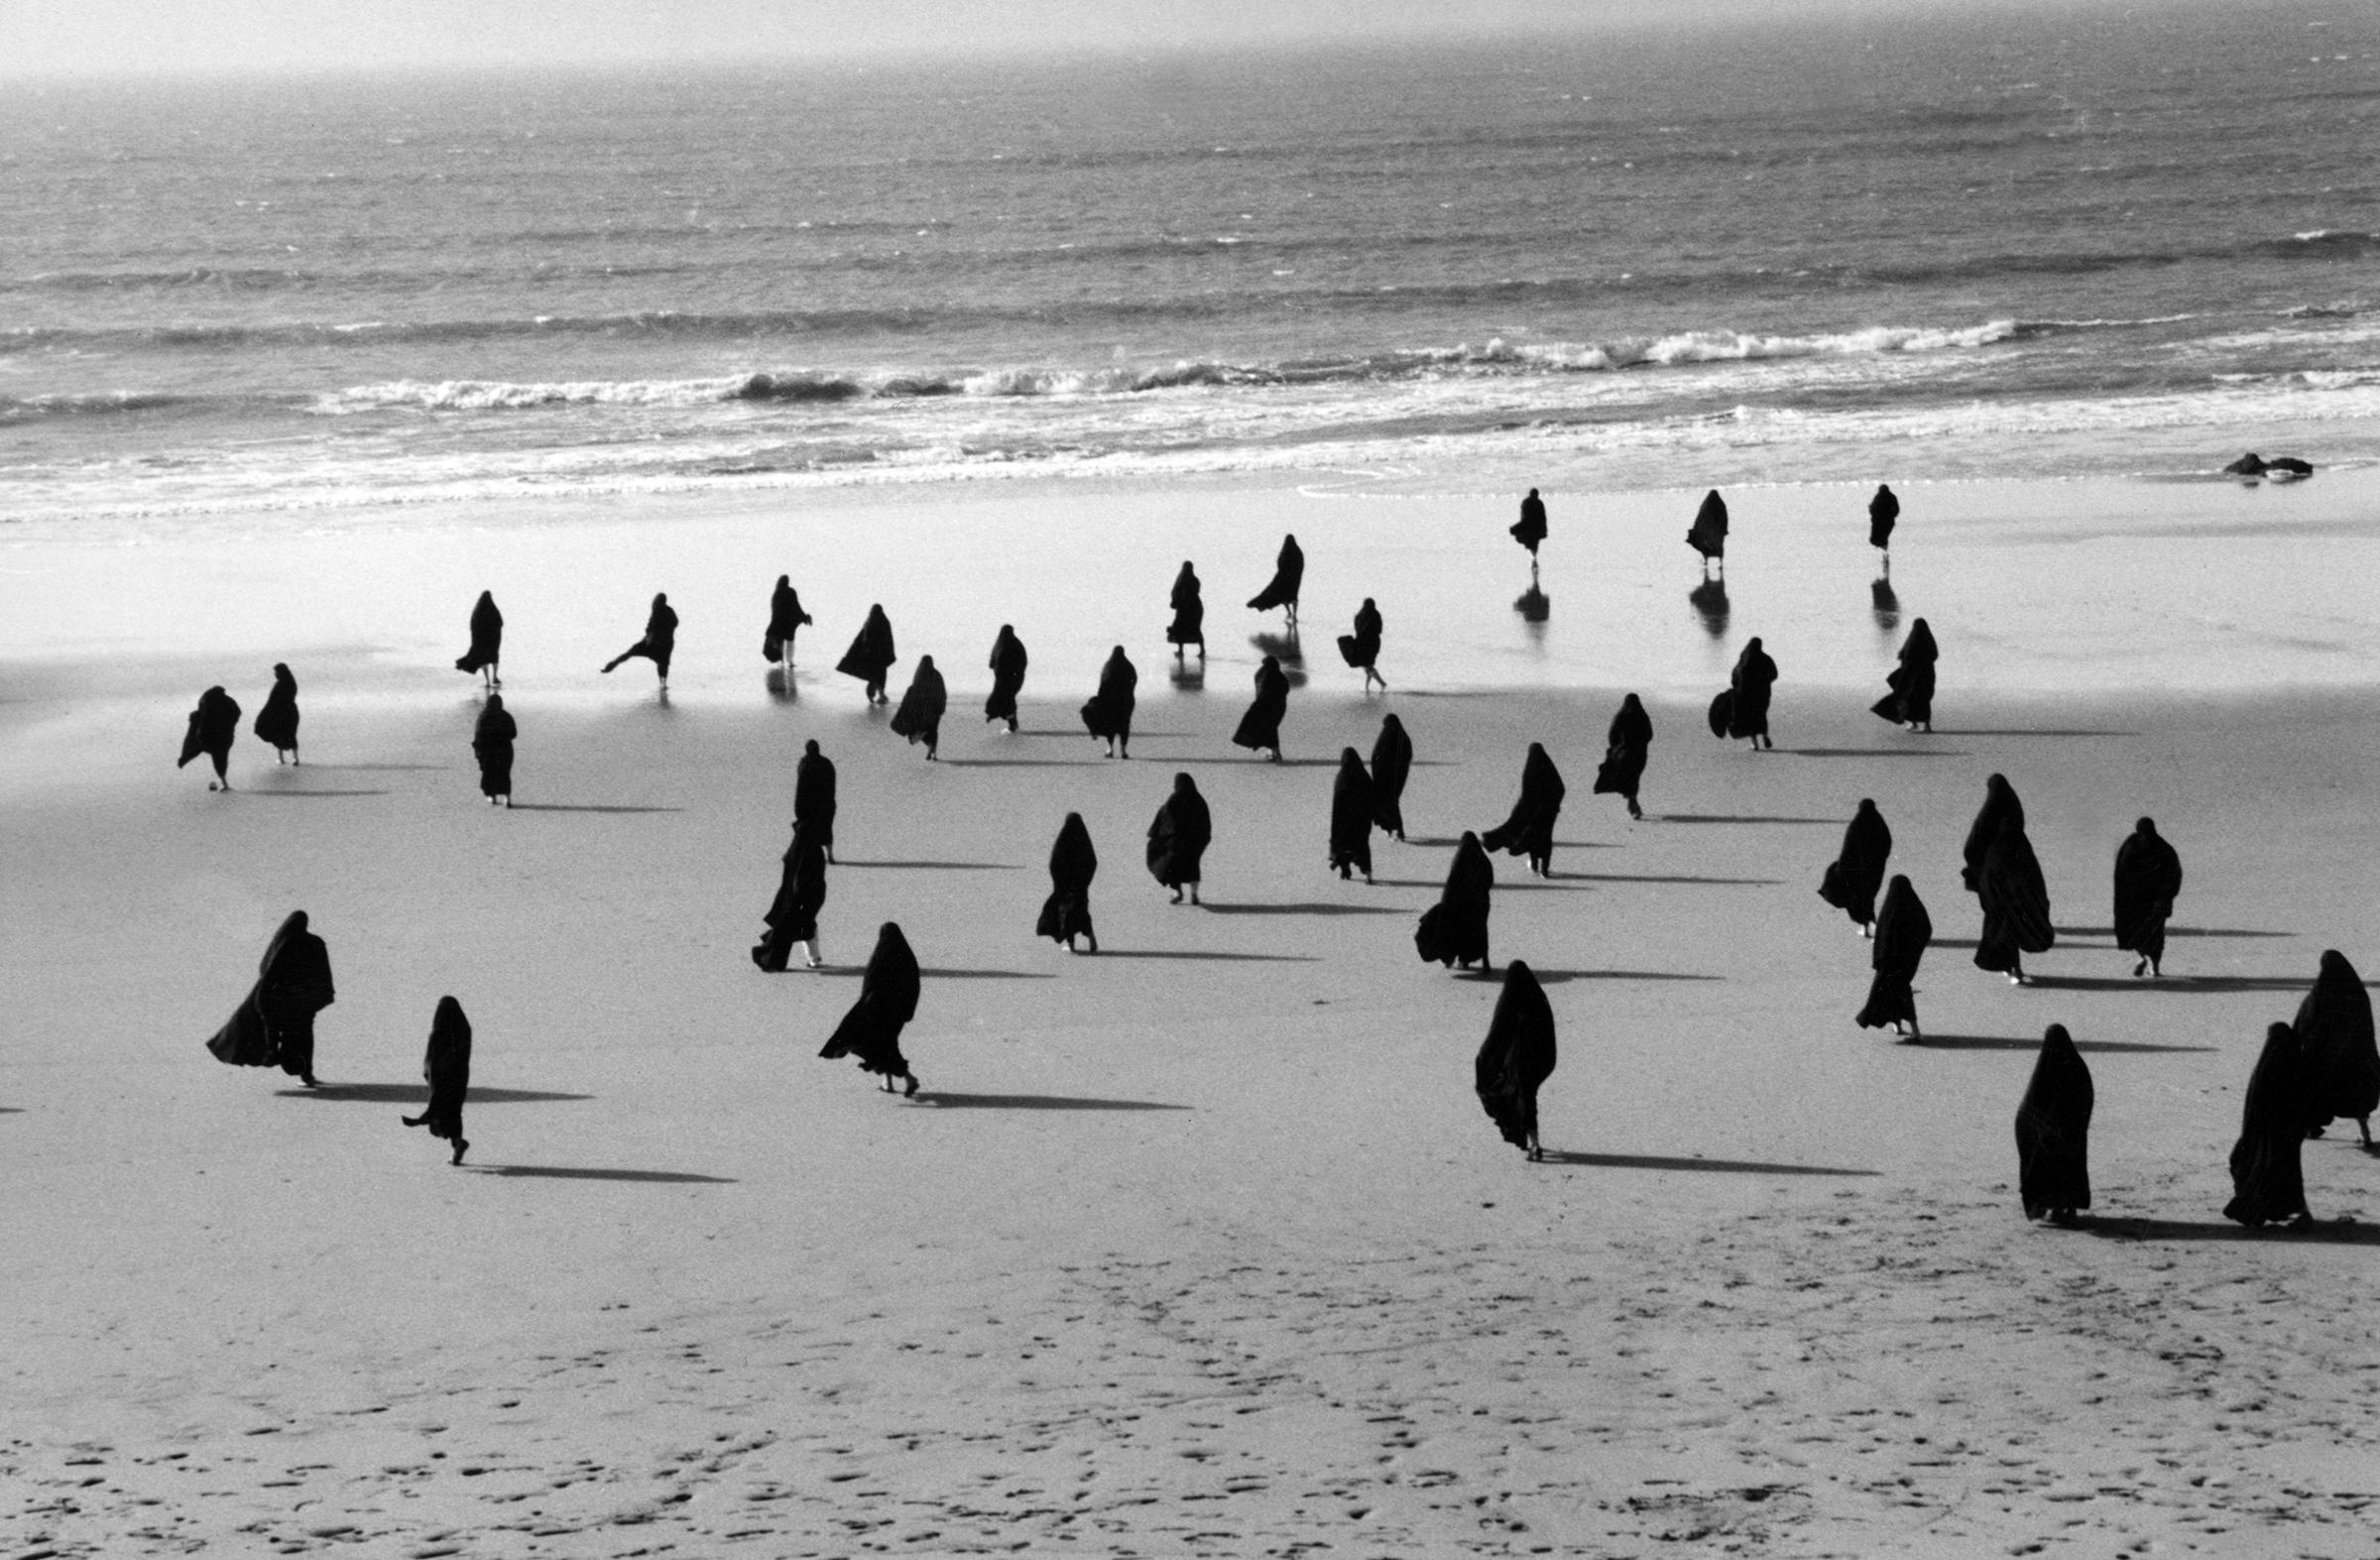 Artist Shirin Neshat Captures Irans Sharp Contrasts In Black And White Wpsu 